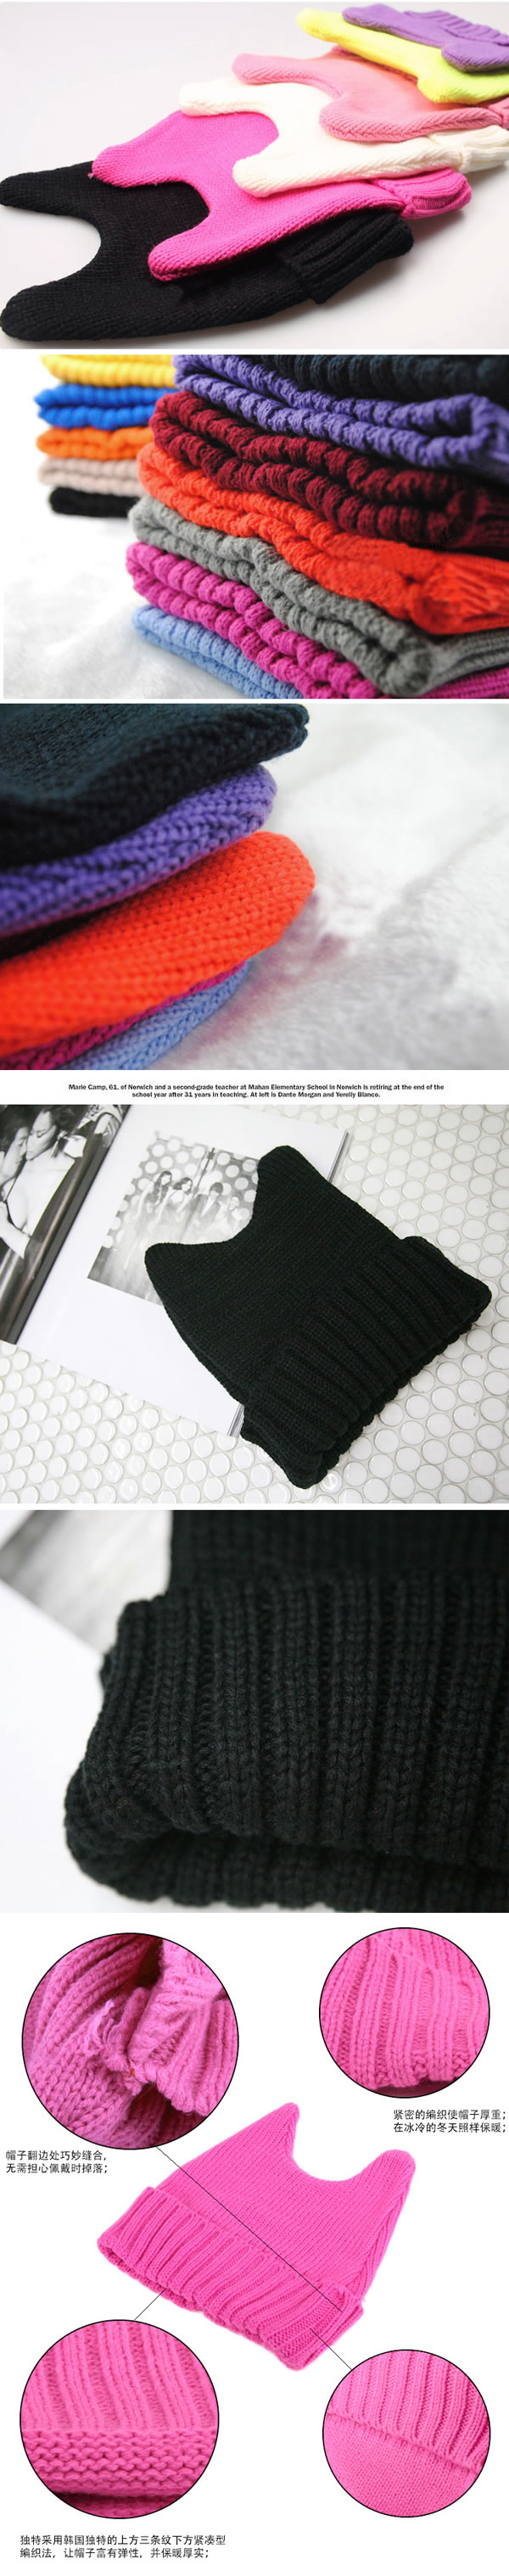 Model:  Item Brand: Knitting Wool Hats,Knitting Wool Hats